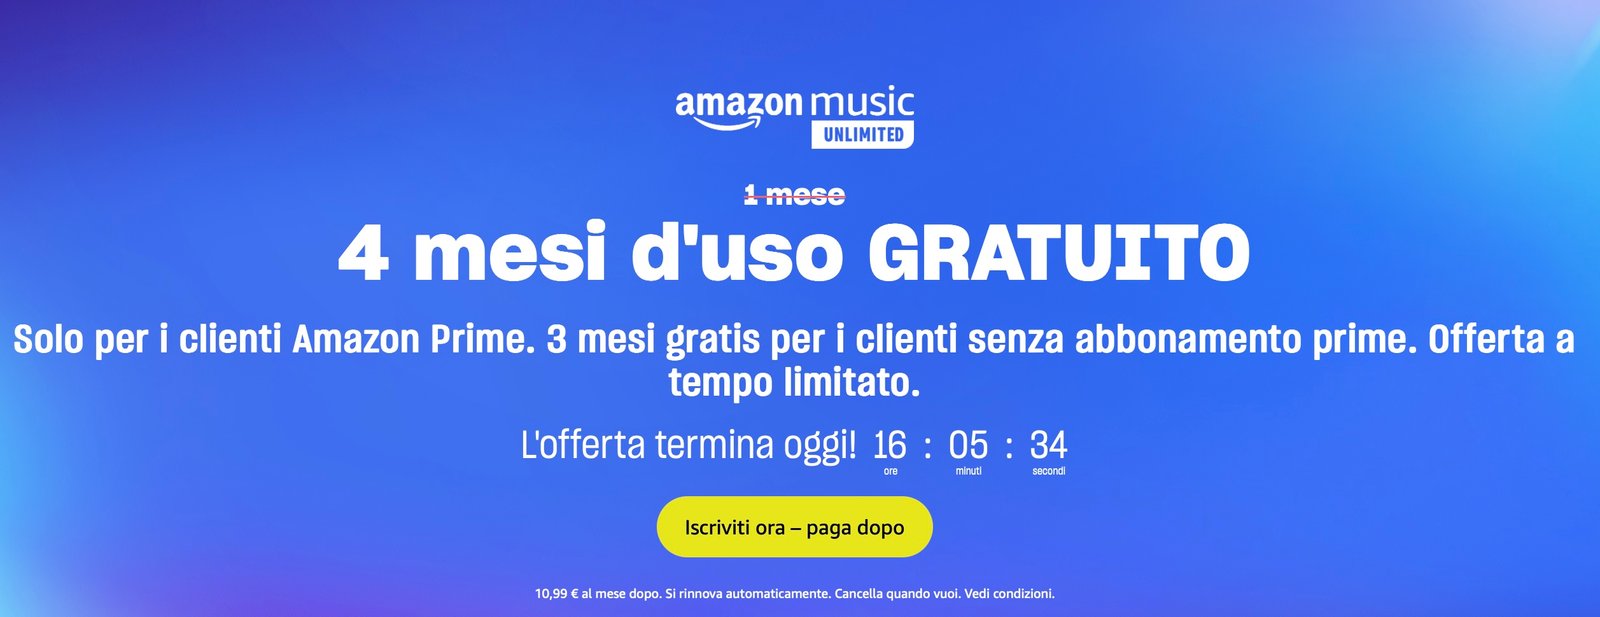 Amazon Music Unlimited 4 mesi gratis